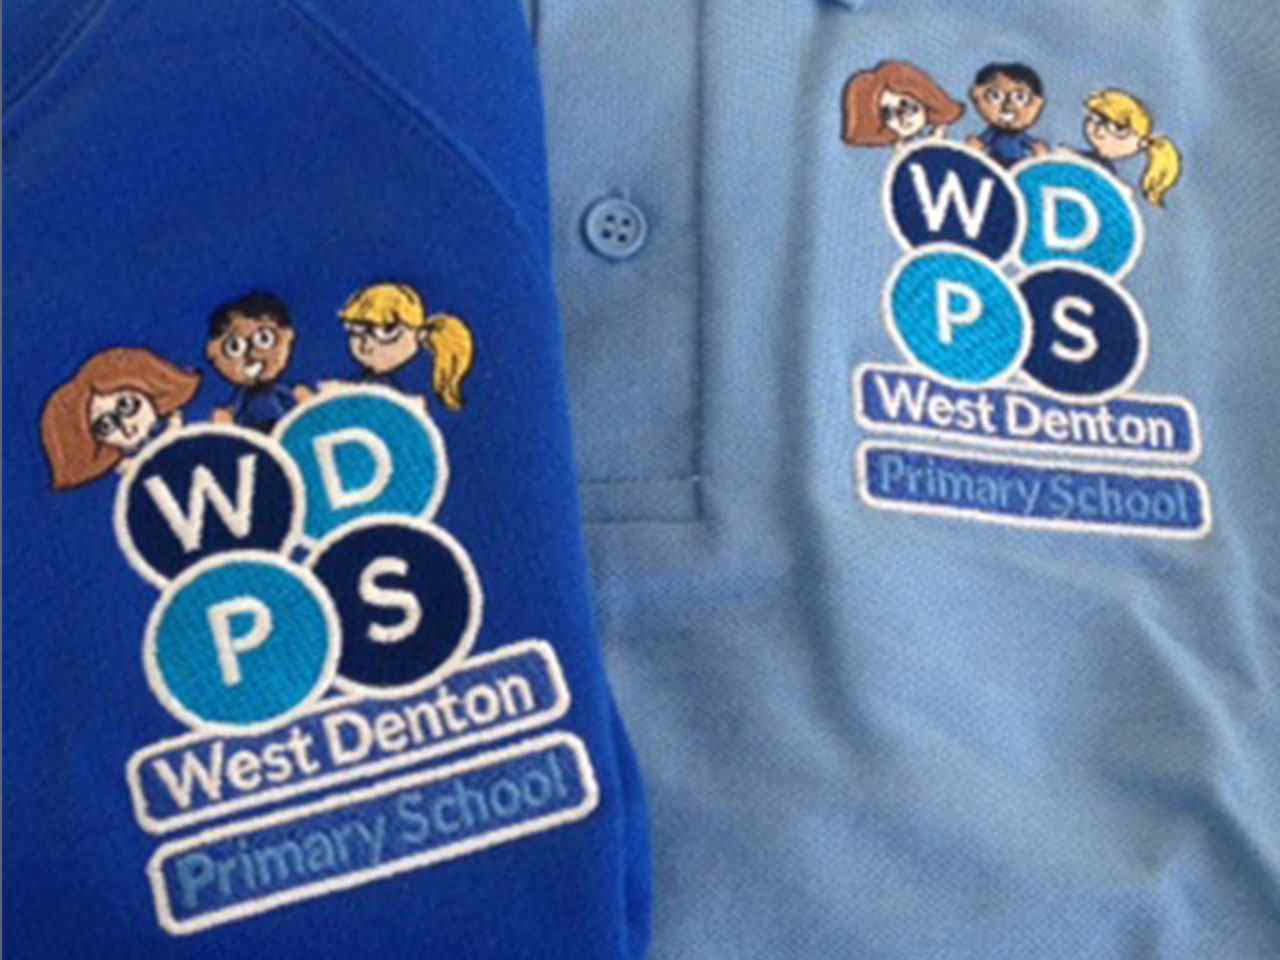 WDPS logo on uniform